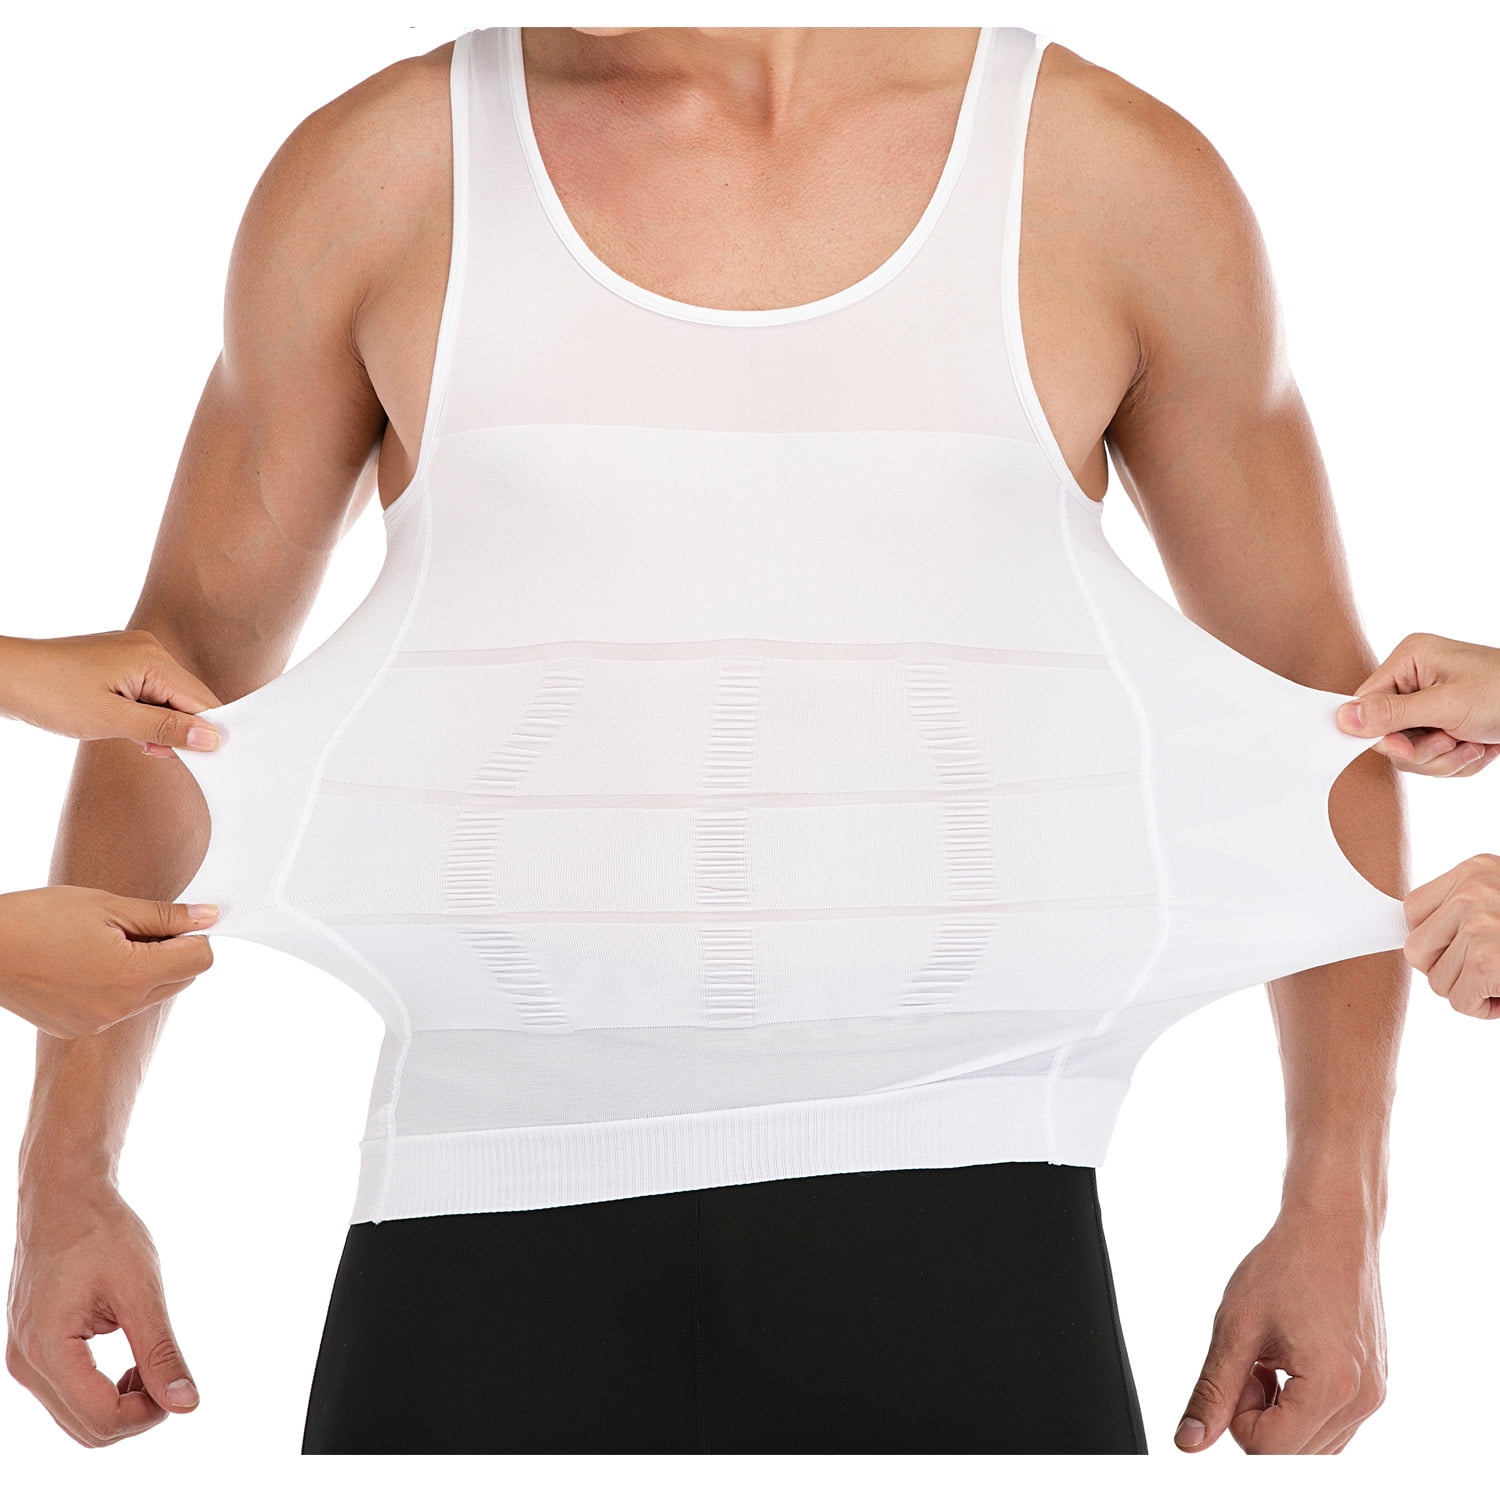 Novco Men's Chest Compression Shirt to Hide Gynecomastia Moobs